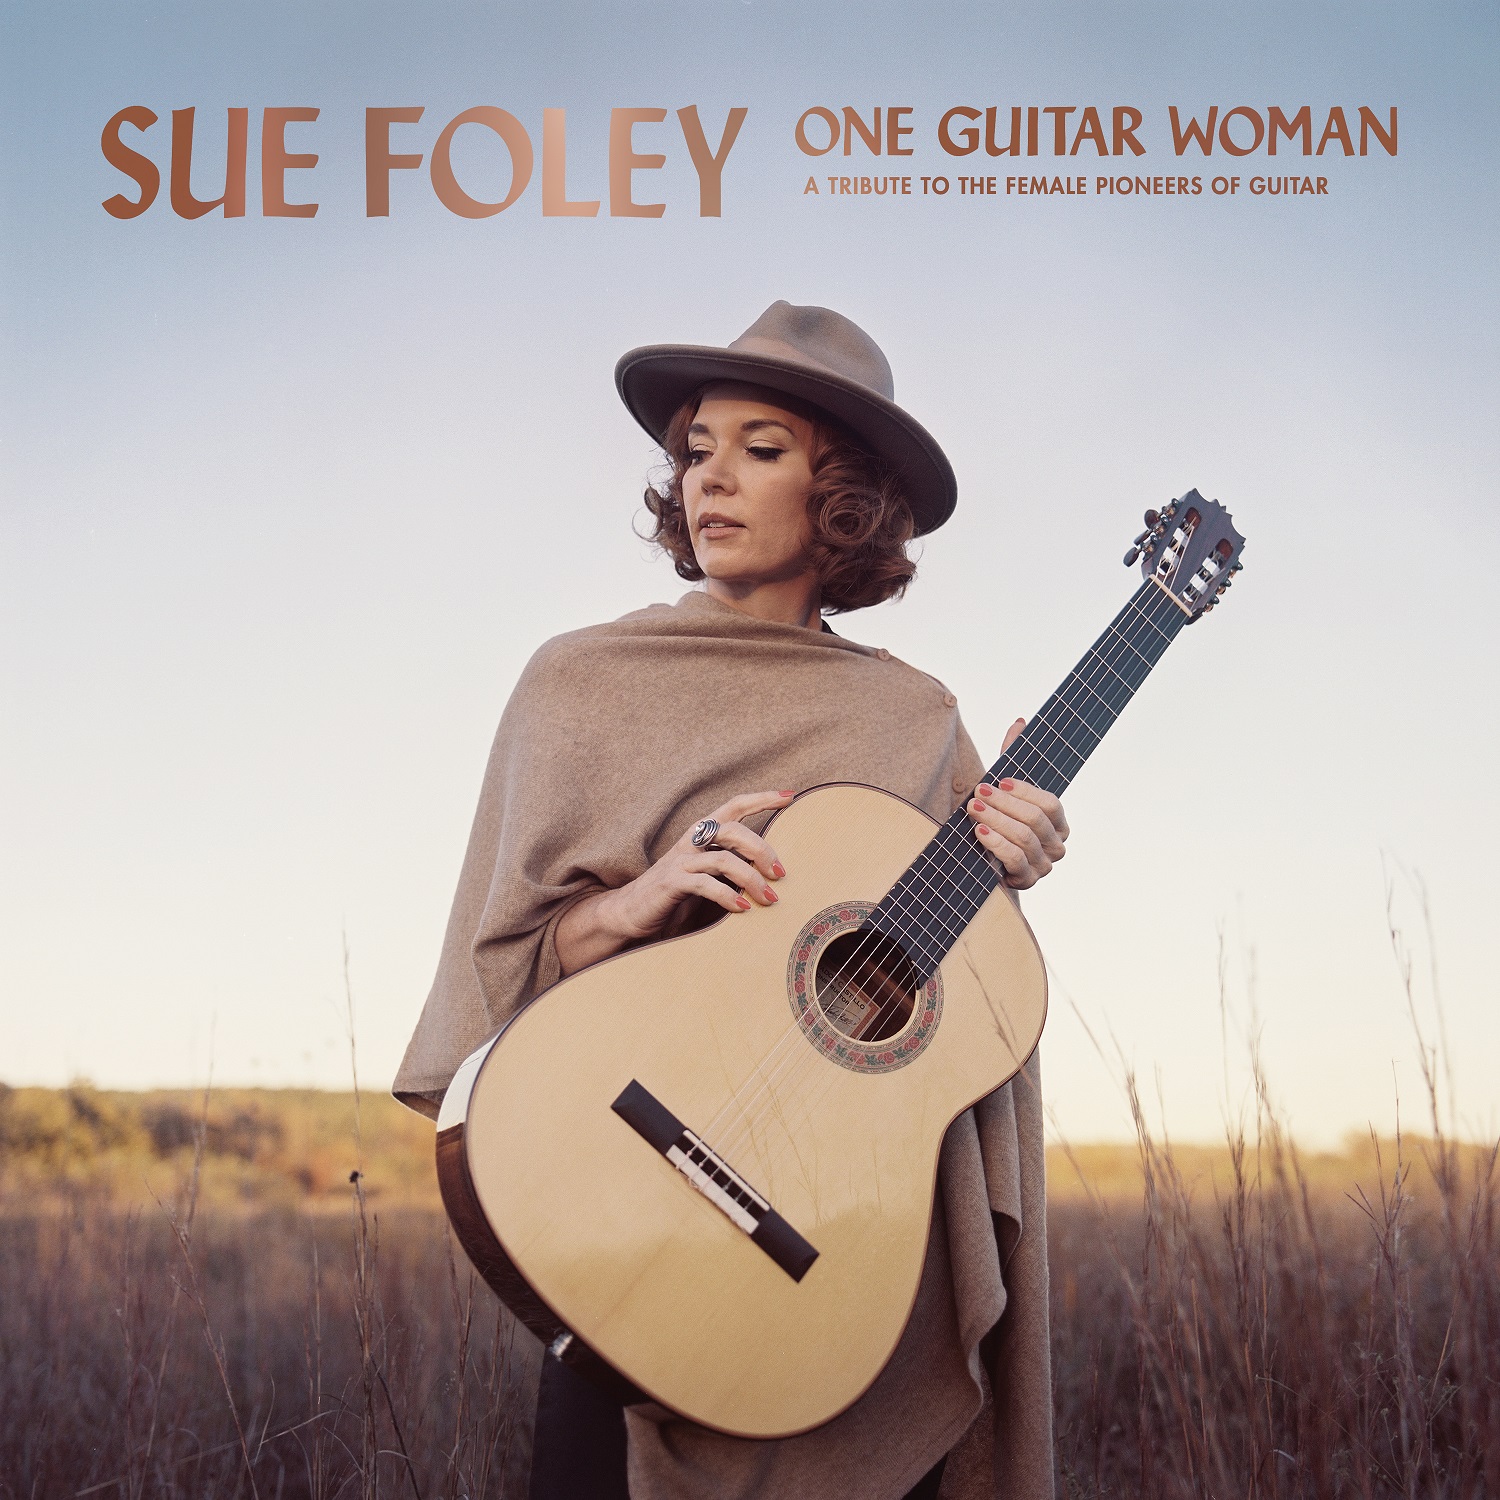  SUE FOLEY ANNOUNCES NEW ONE GUITAR WOMAN ALBUM